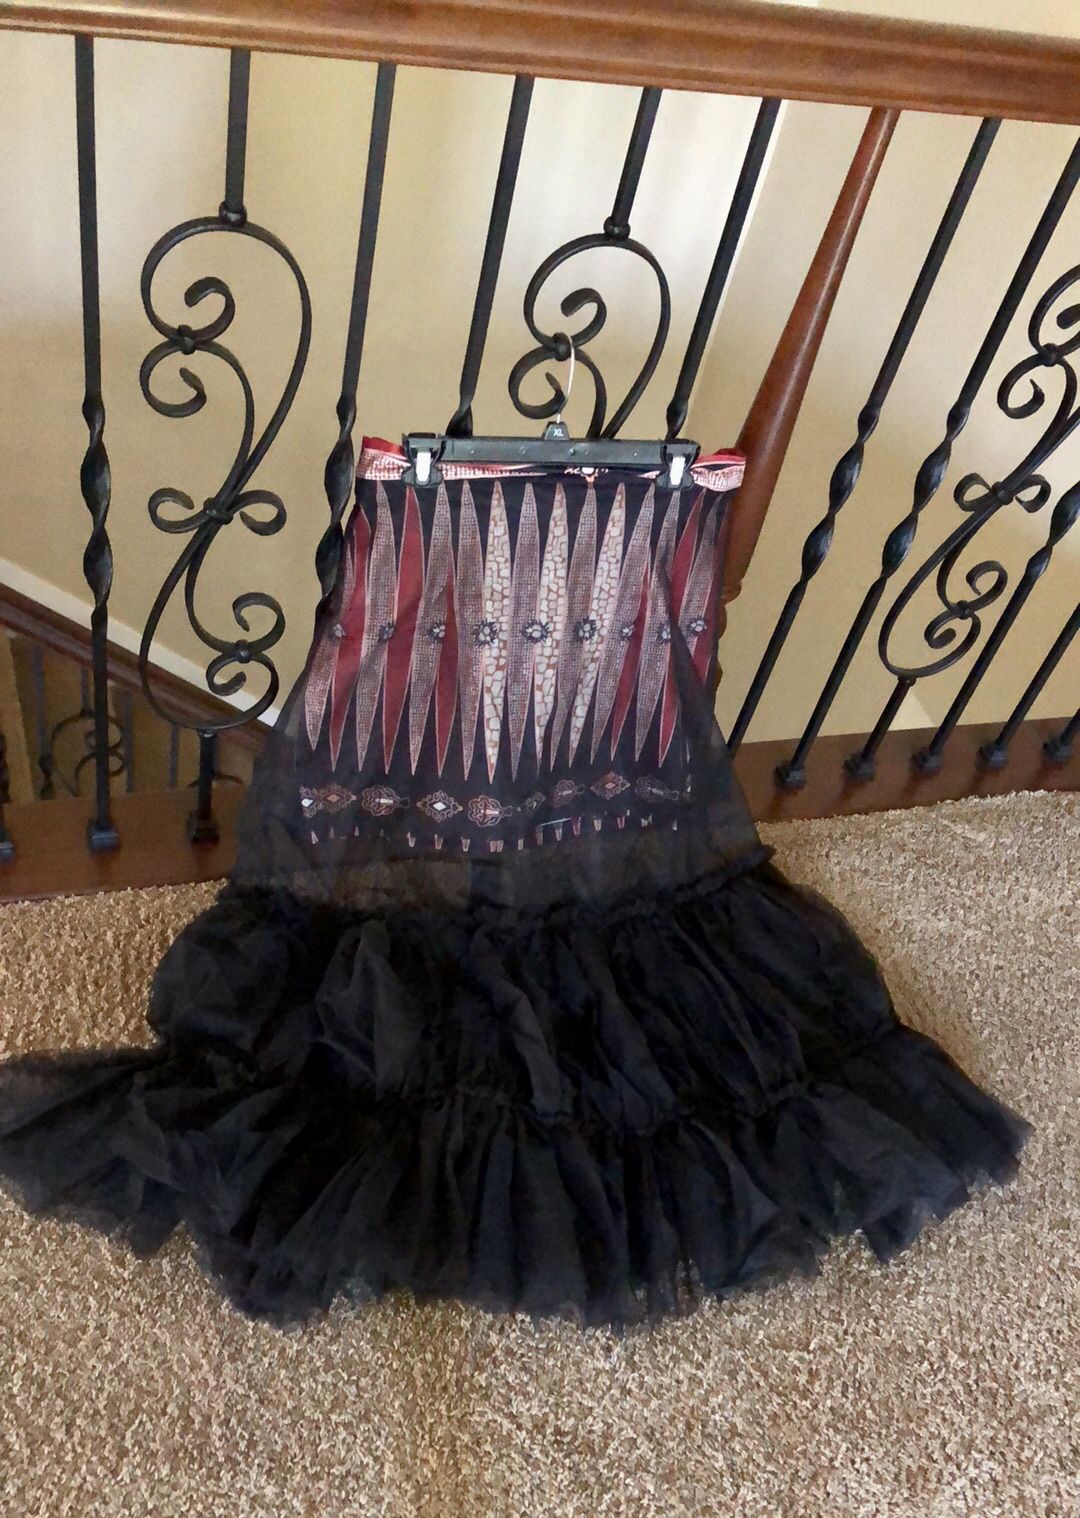 Black Tulle Skirt US L ($10 Pick Up)